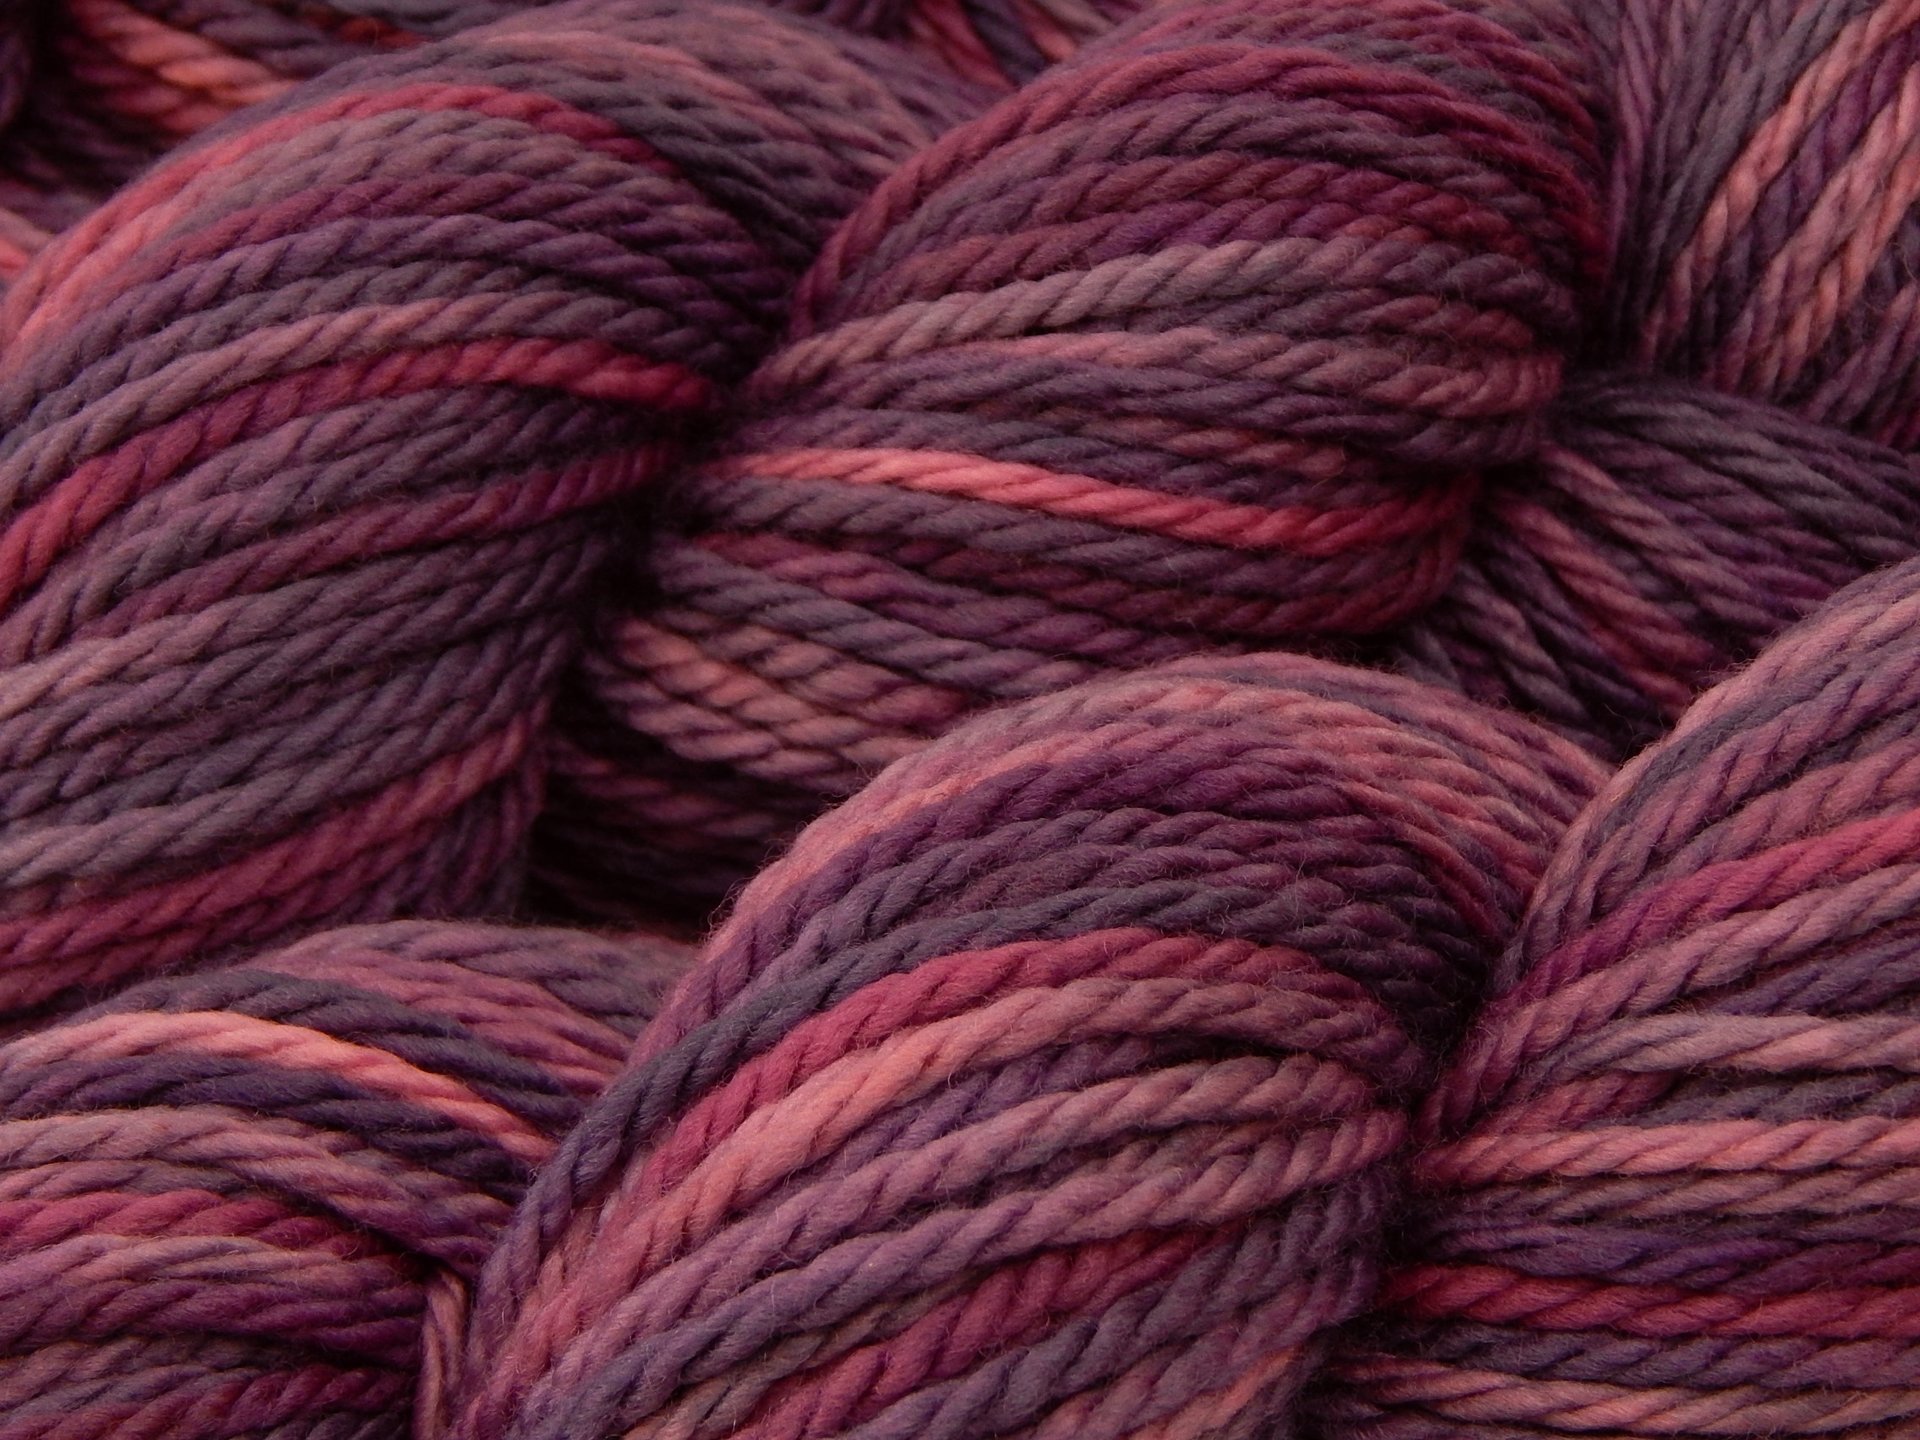 Bulky Hand Dyed Yarn, 100% Superwash Merino Wool - Wisteria Multi - Lavender Lilac Purple Variegated Chunky Knitting Yarn